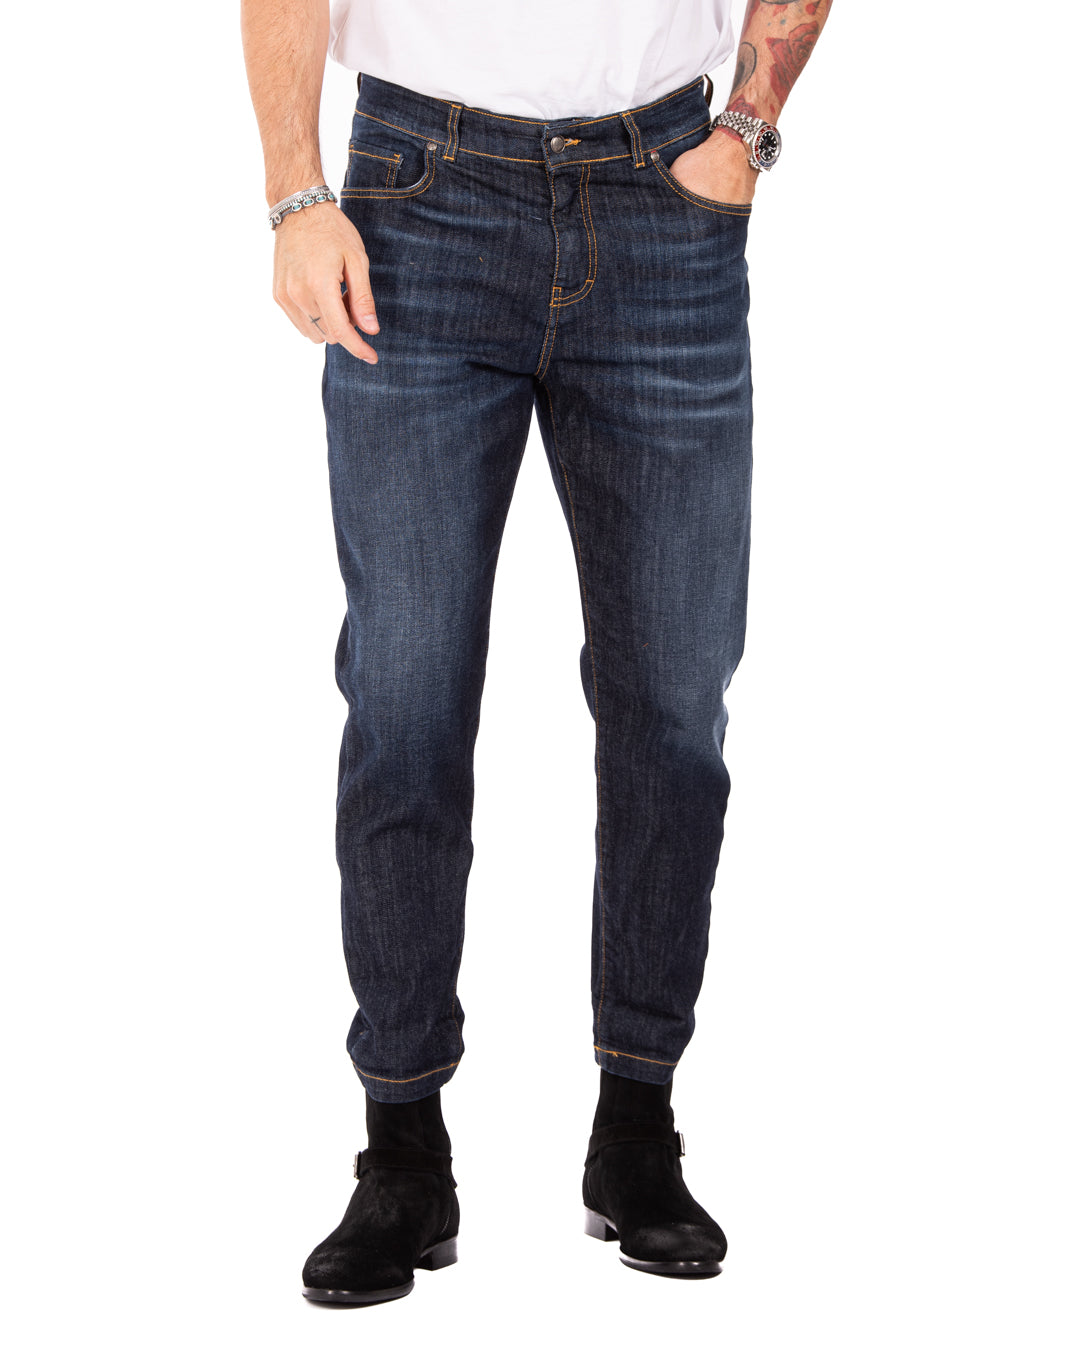 Main - classic dark wash skinny jeans